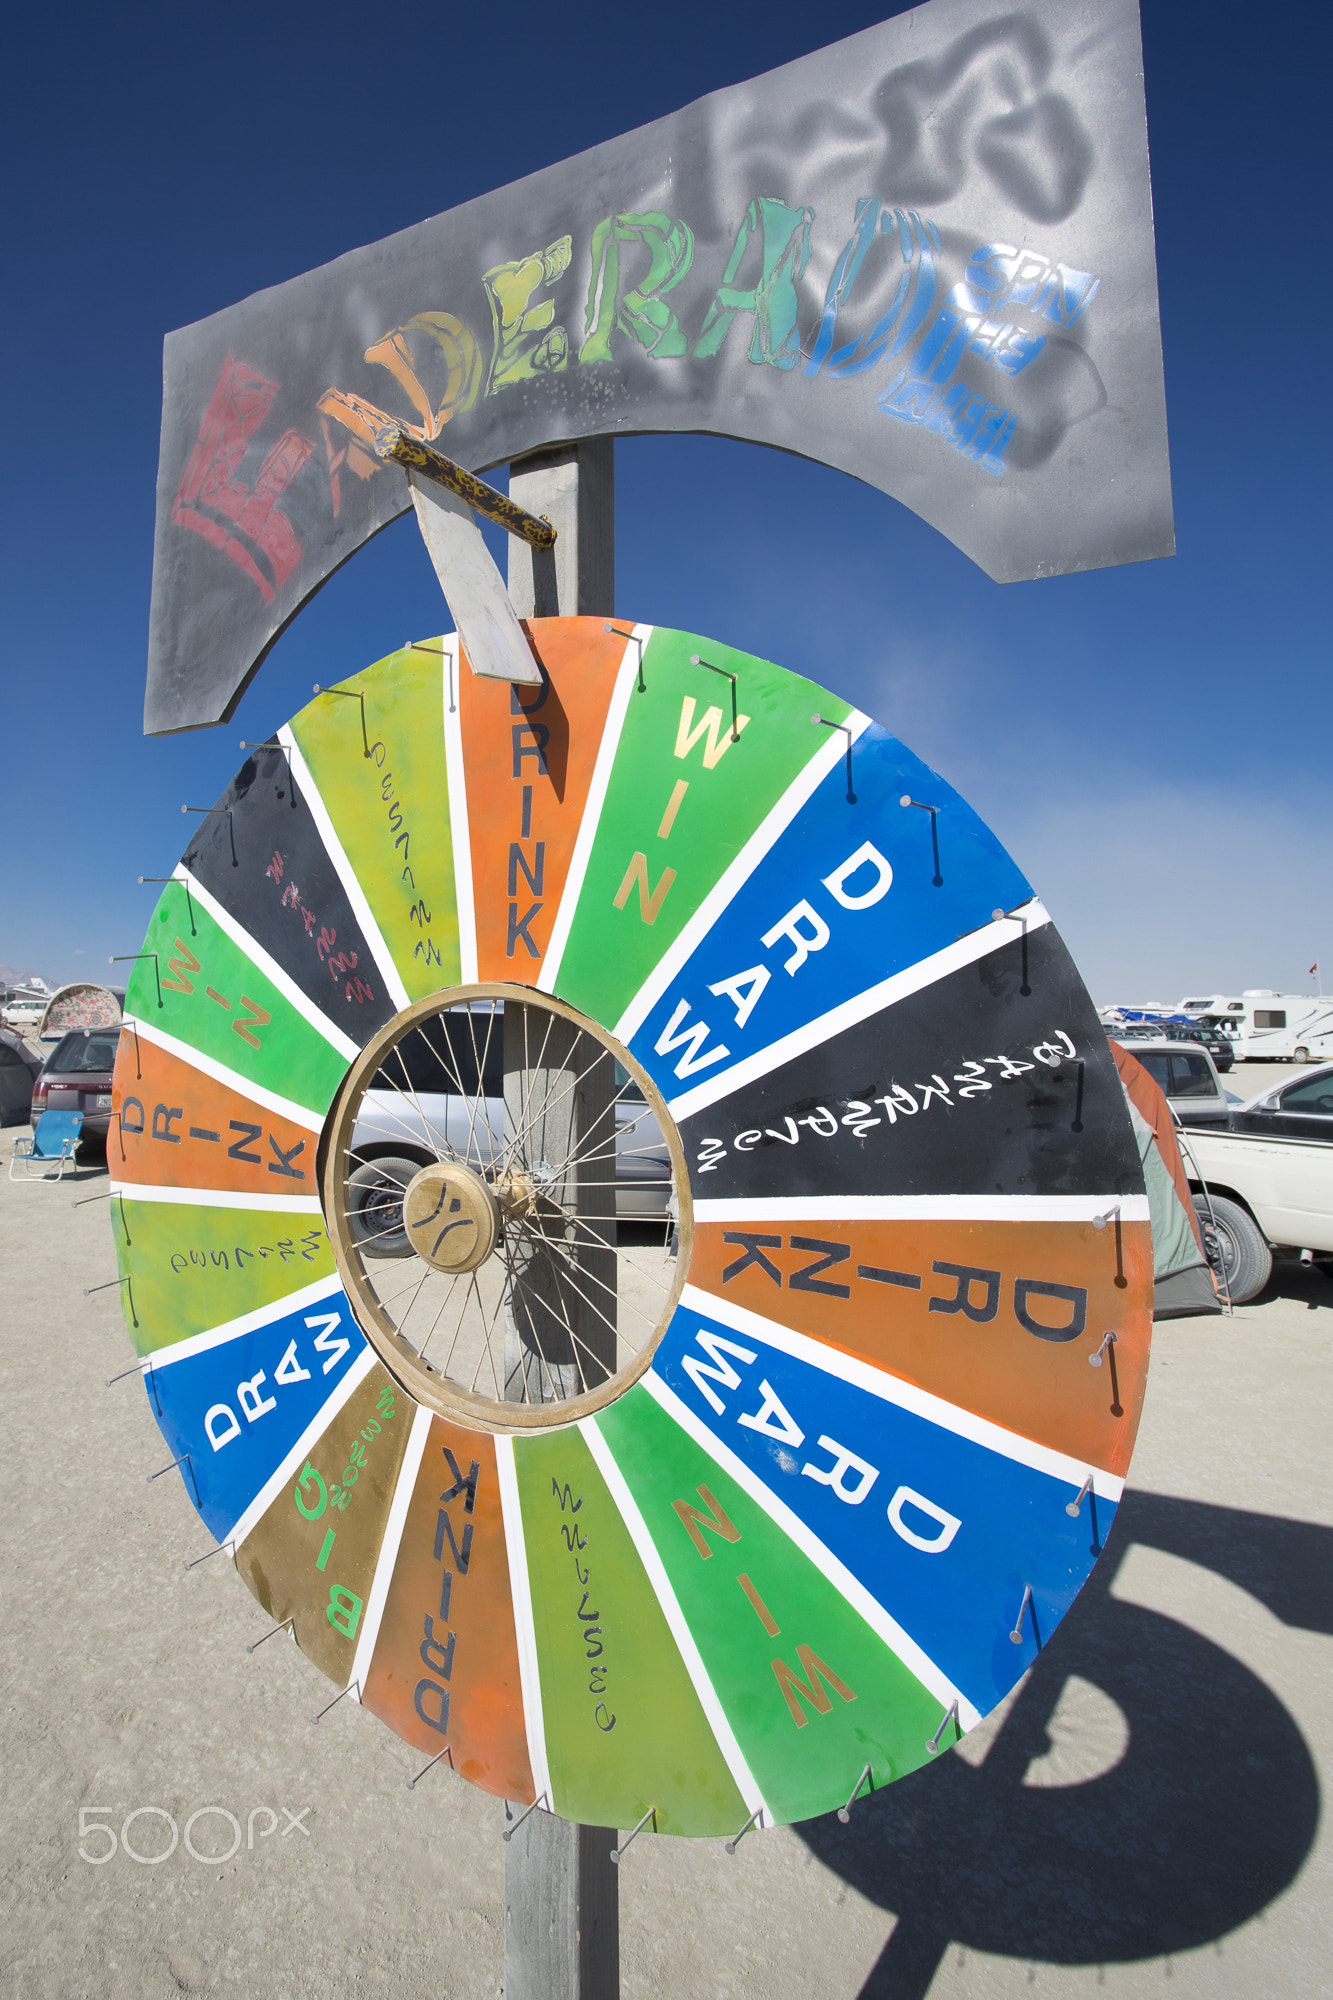 Lifestyle at Burning Man Festival 2012